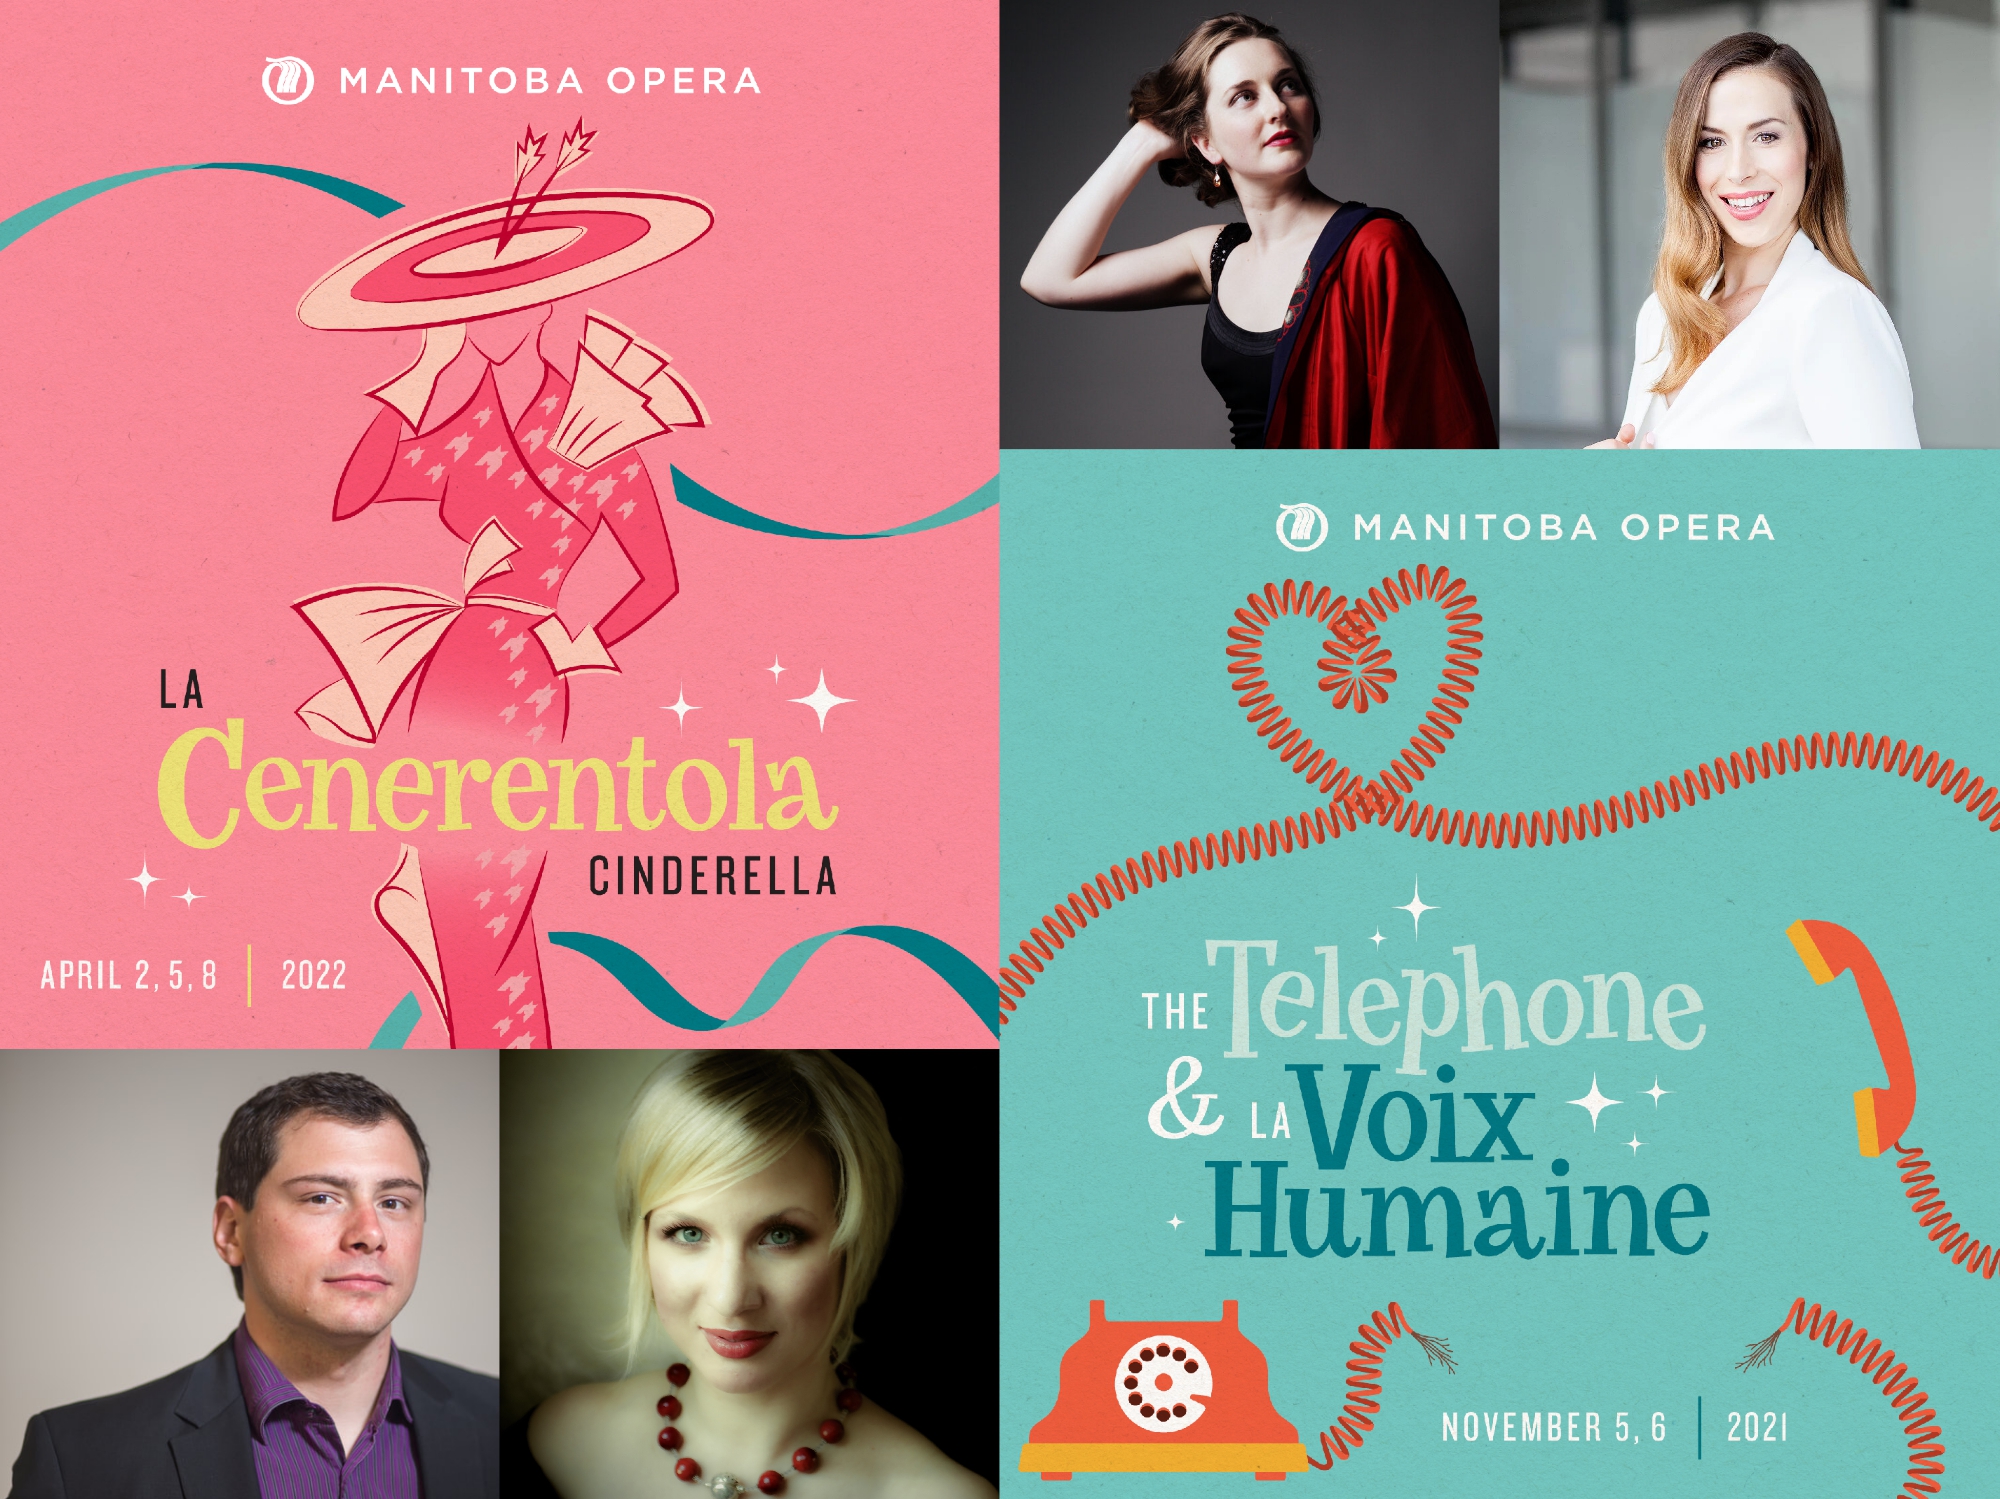 Manitoba Opera’s 21/22 season of live performances